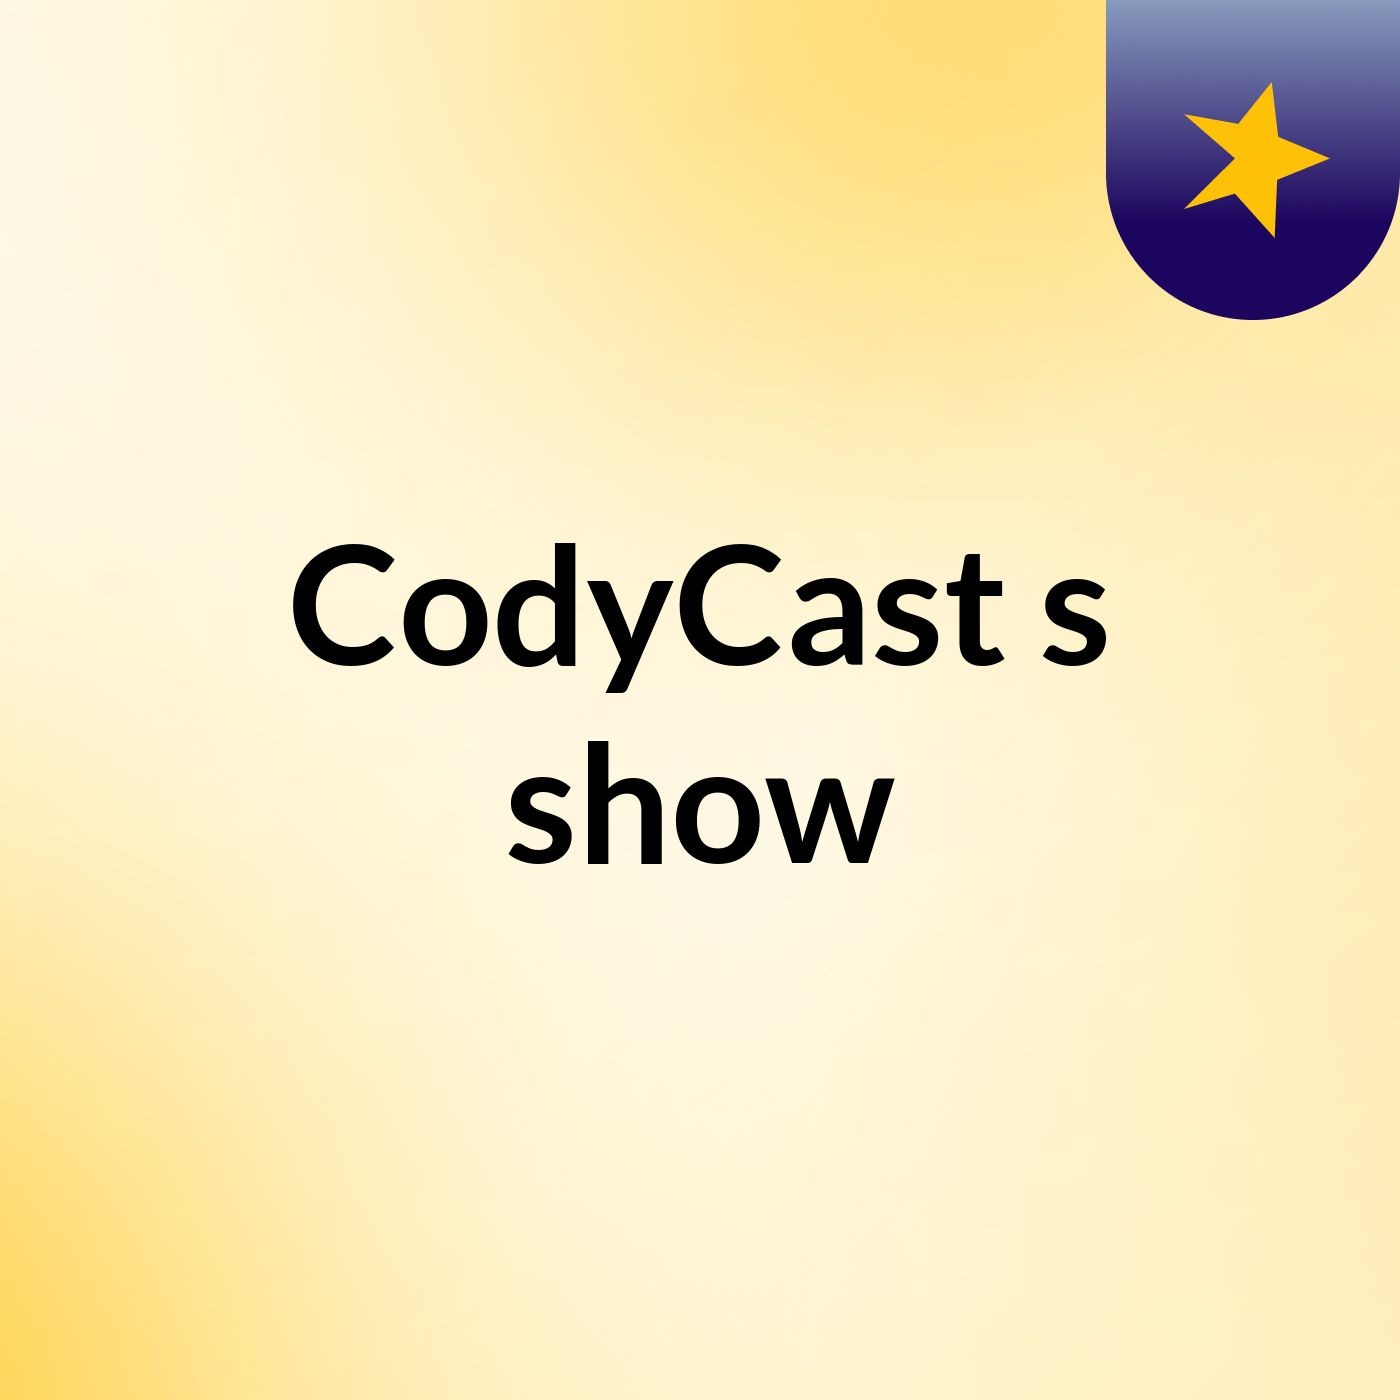 CodyCast's show